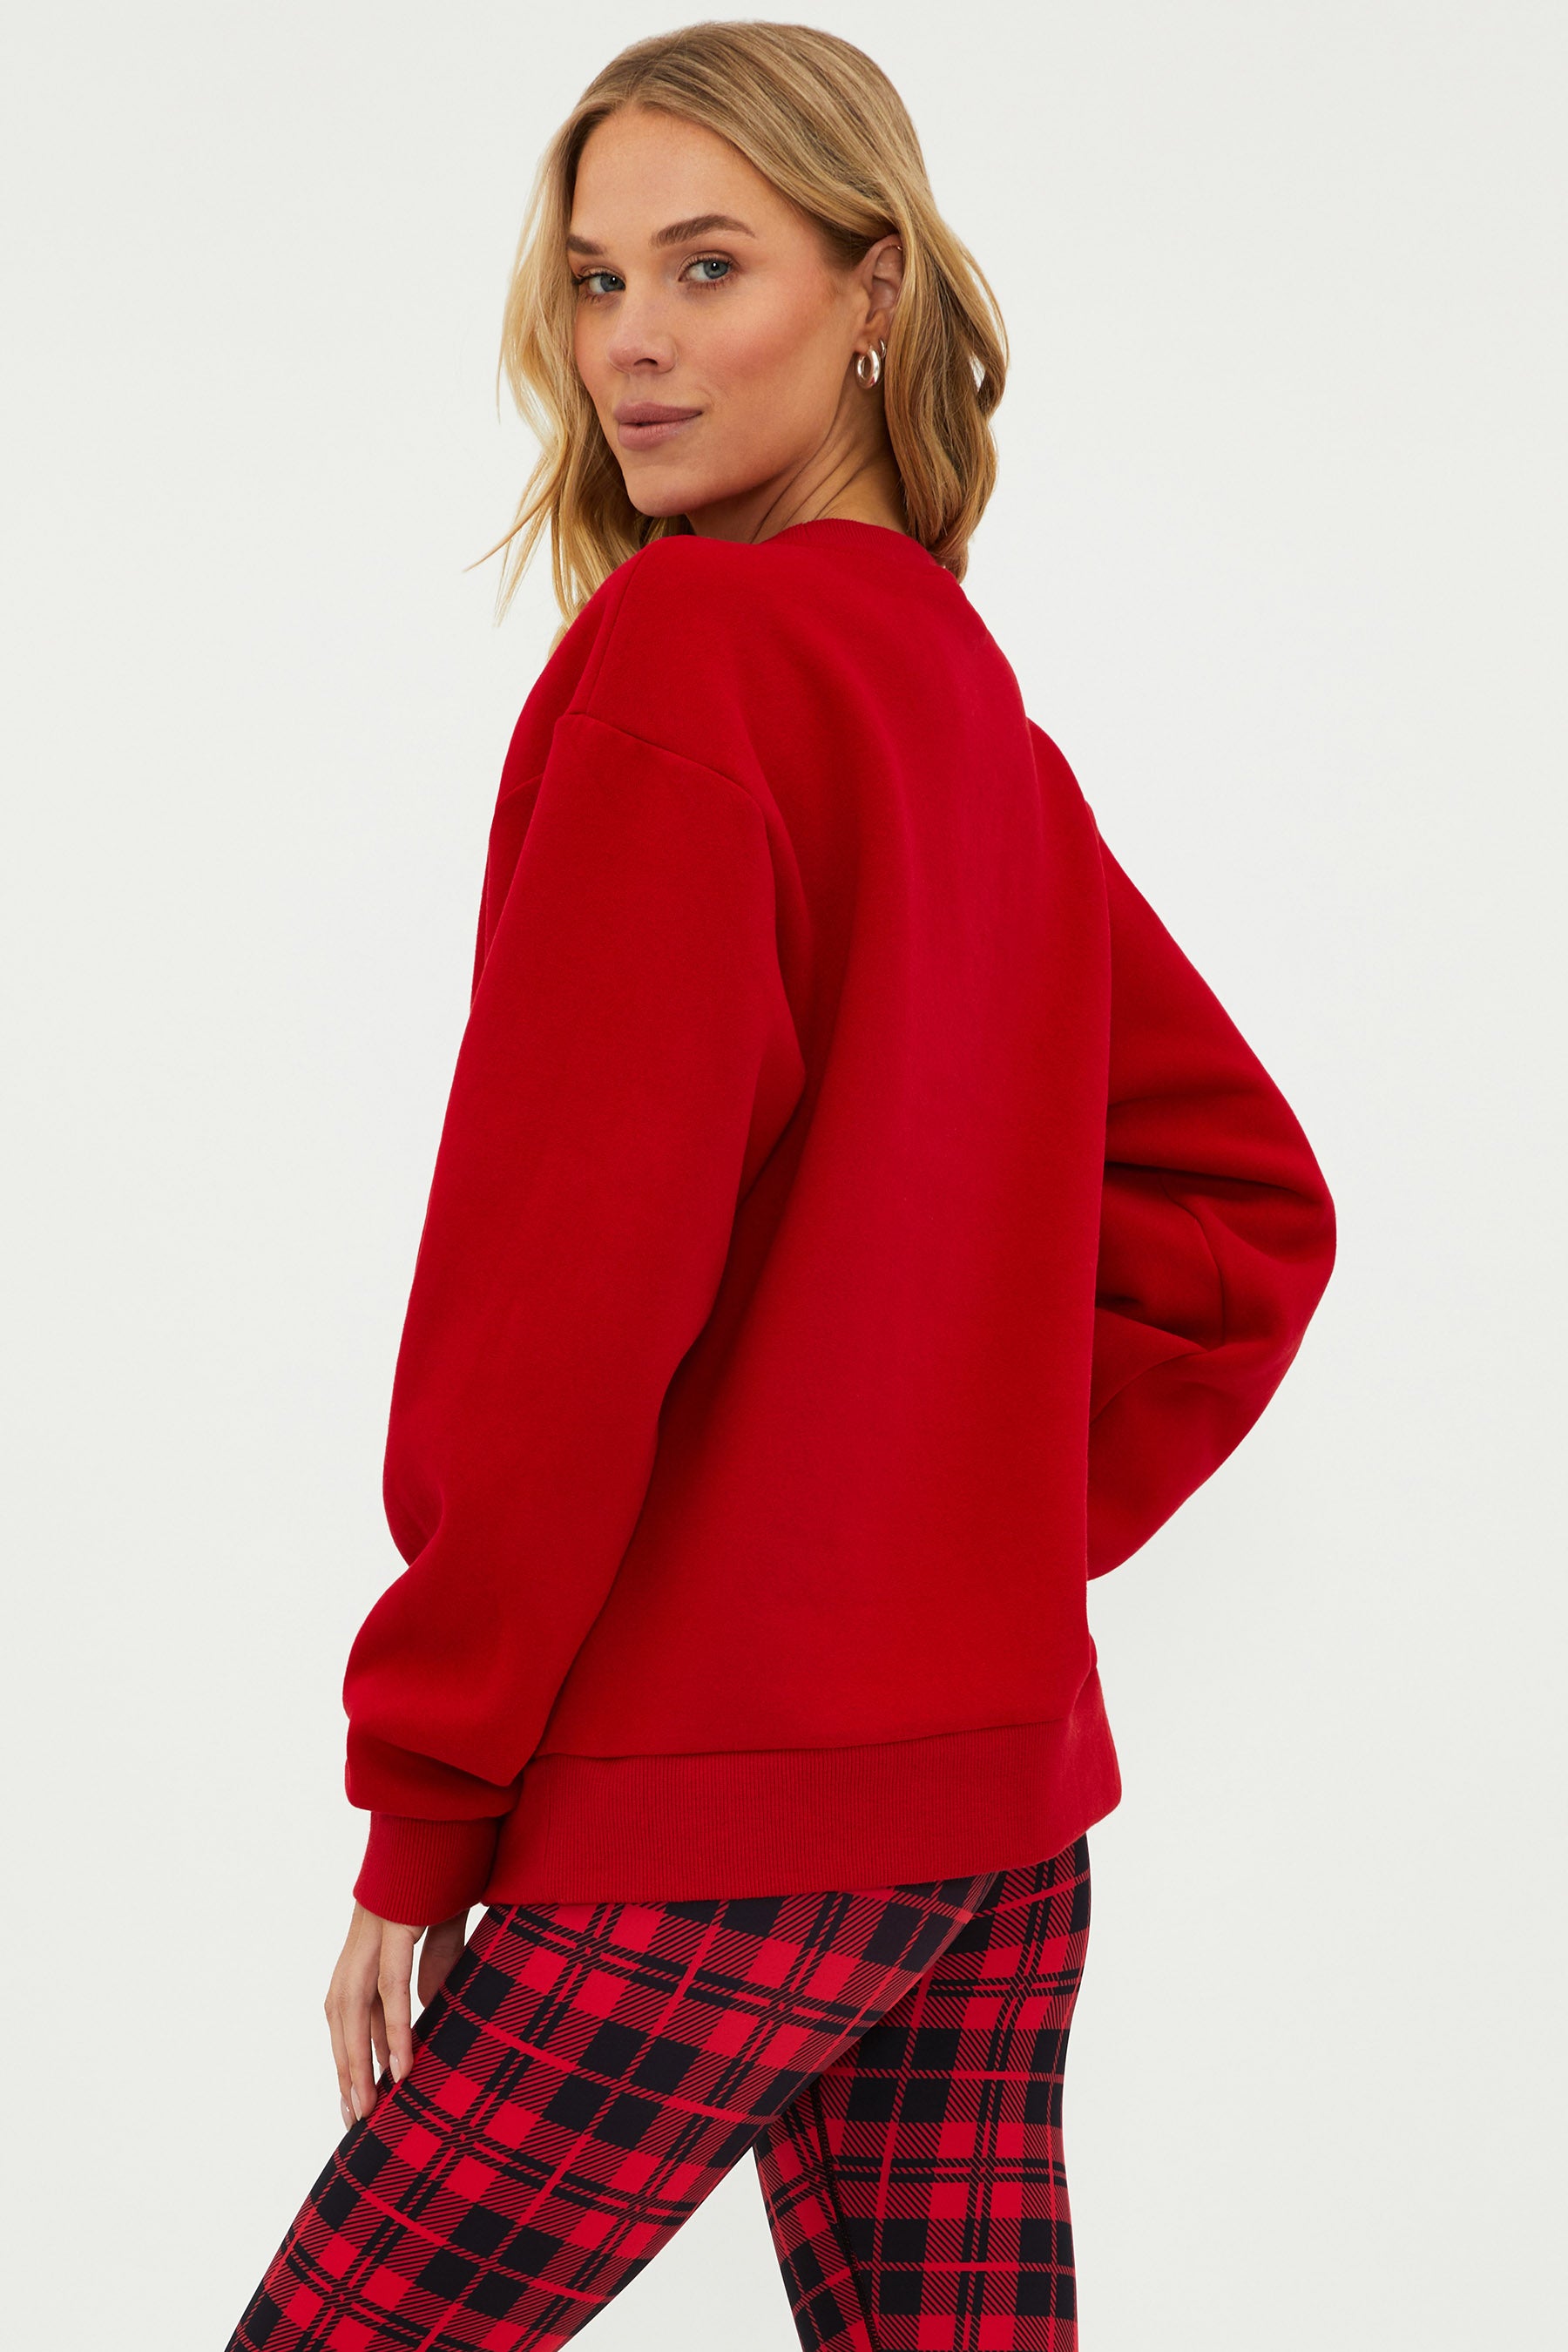 Dawn Sweatshirt Merry Red